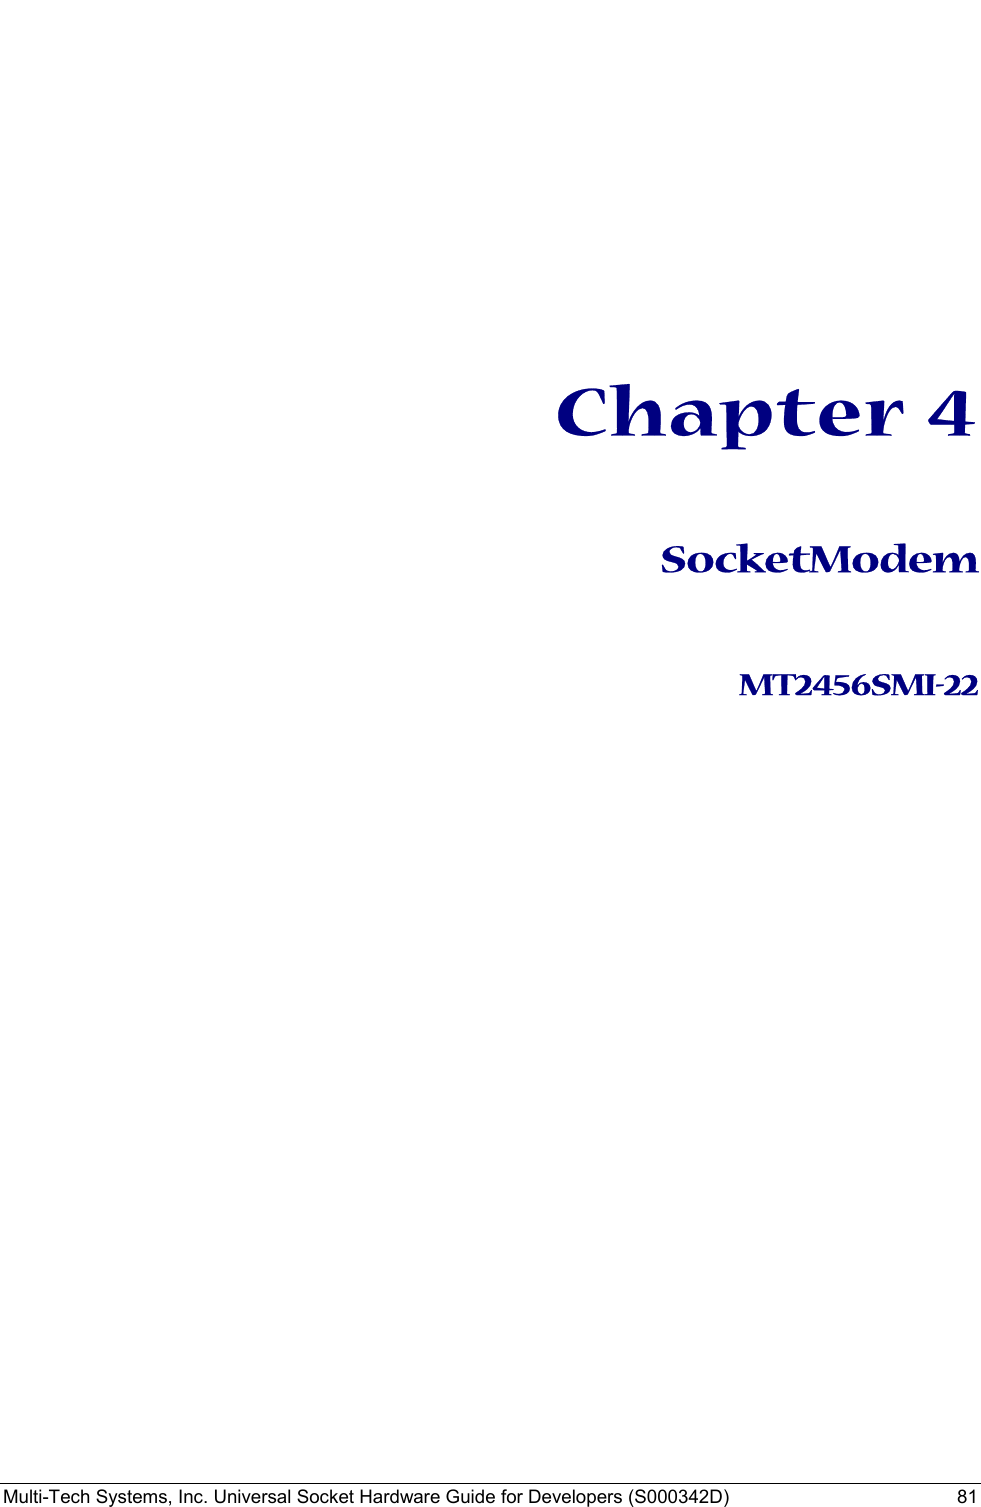  Multi-Tech Systems, Inc. Universal Socket Hardware Guide for Developers (S000342D)  81      Chapter 4  SocketModem   MT2456SMI-22  